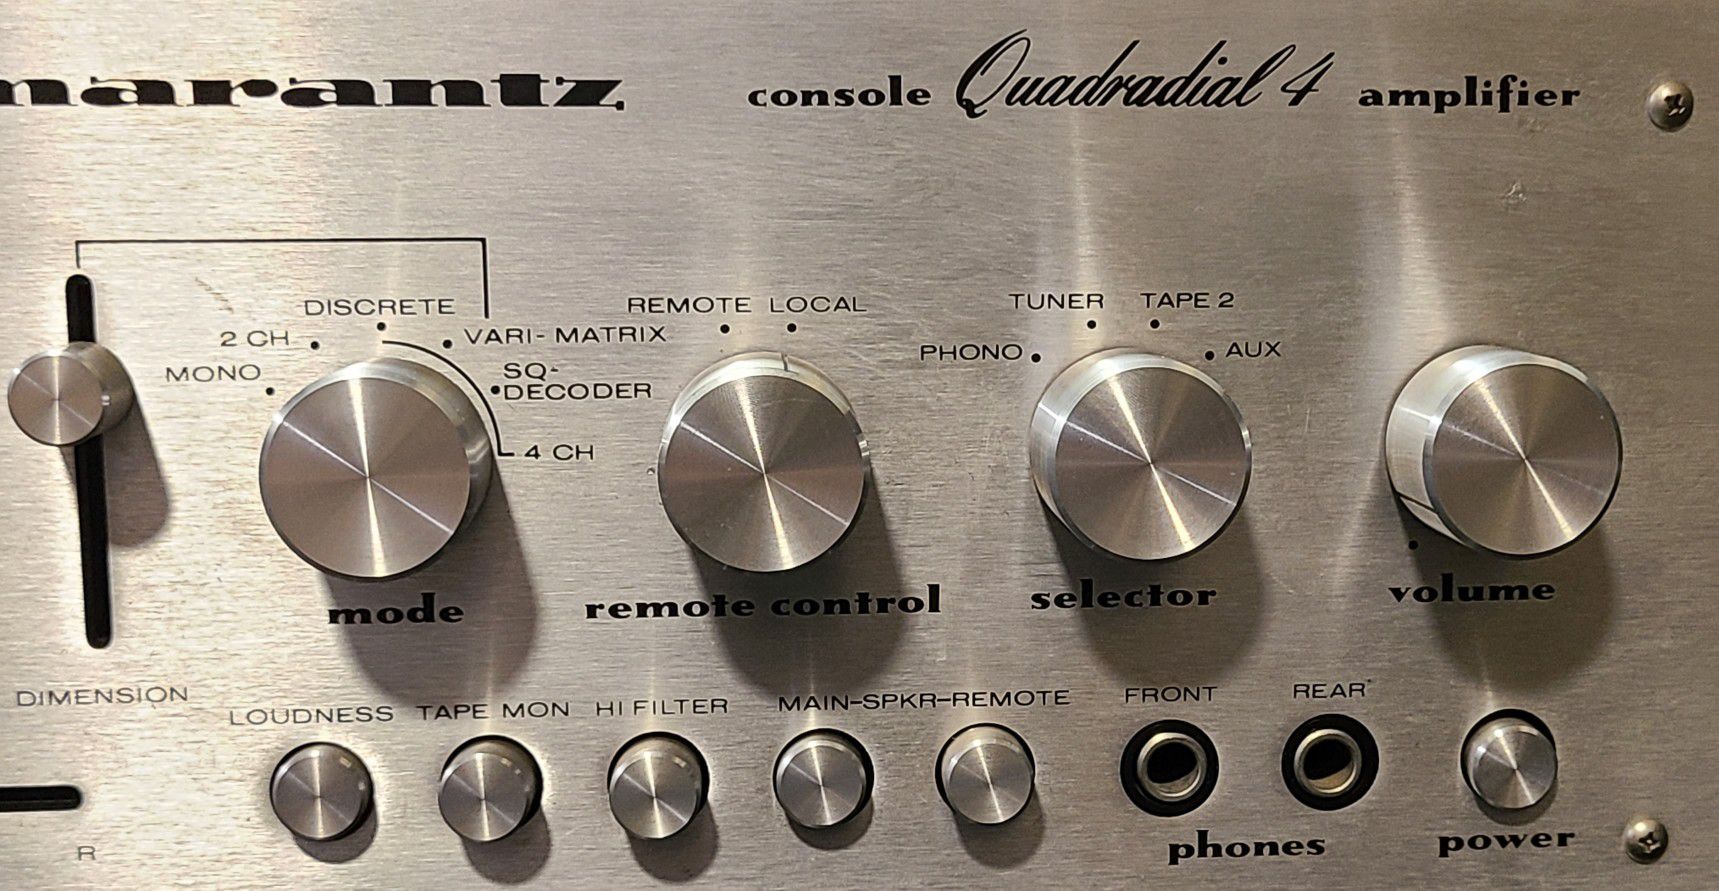 Marantz Model 4060 Quadradial 4 Amplifier